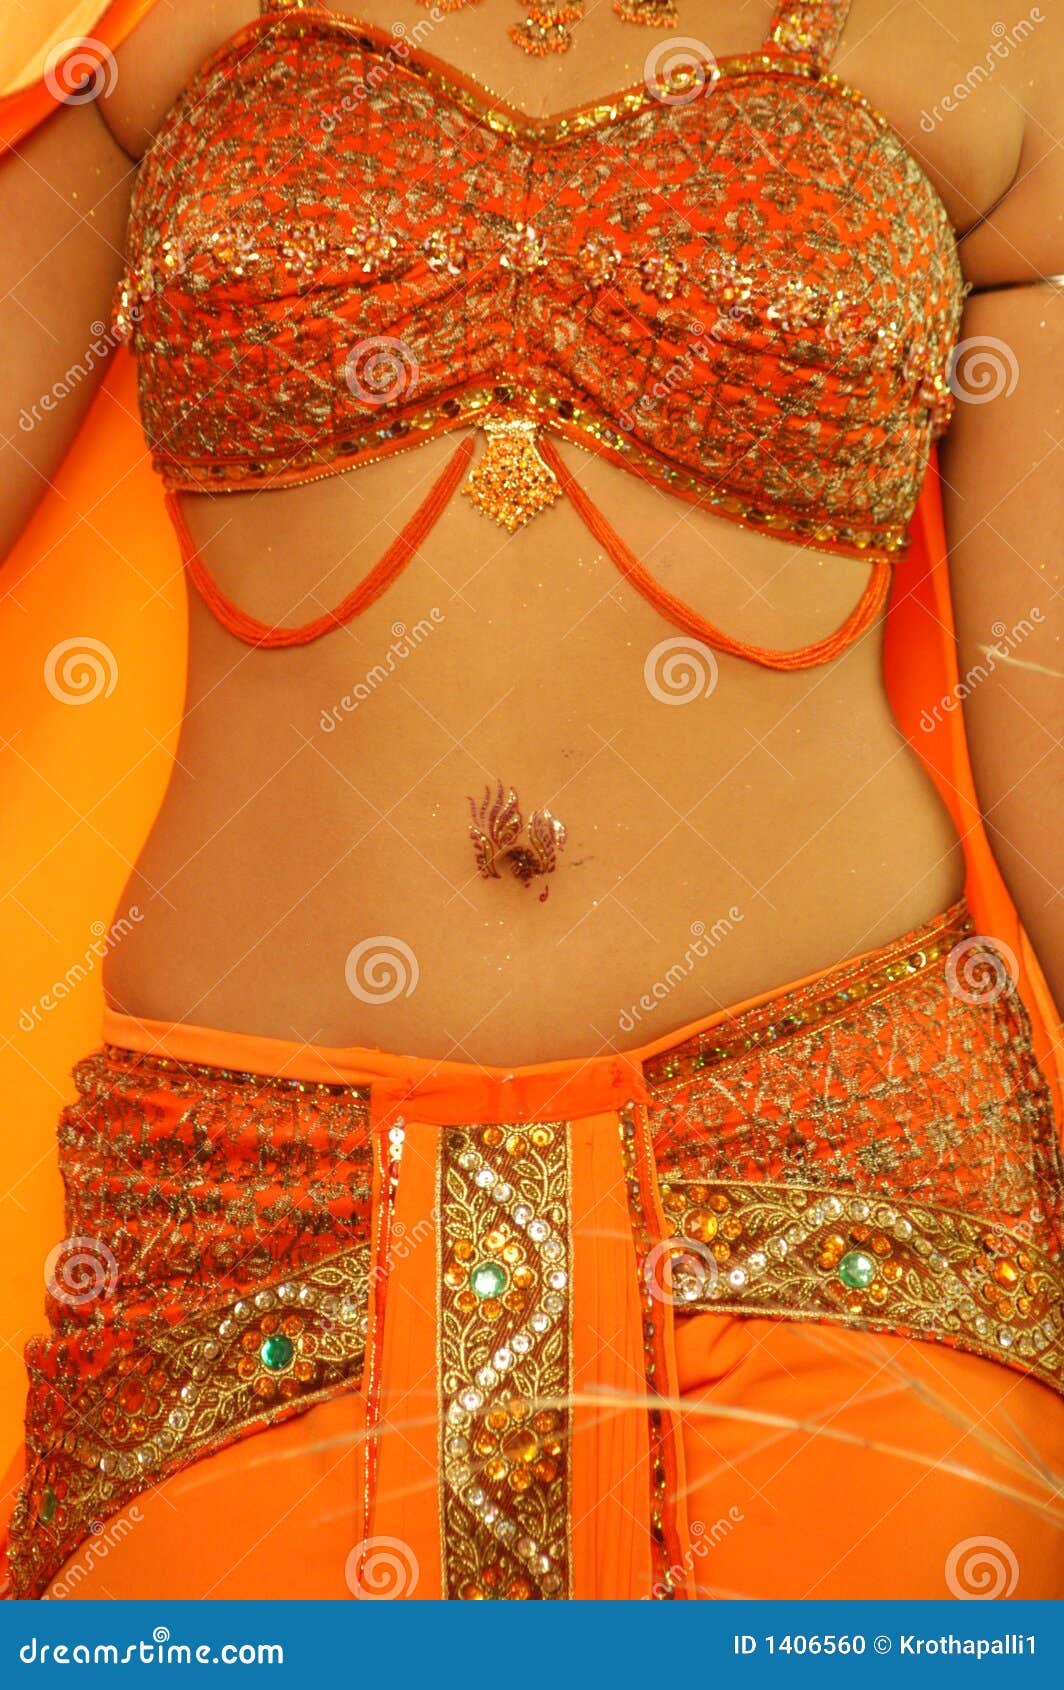 Belly dancer closeup stock photo. Image of decorative - 1406560